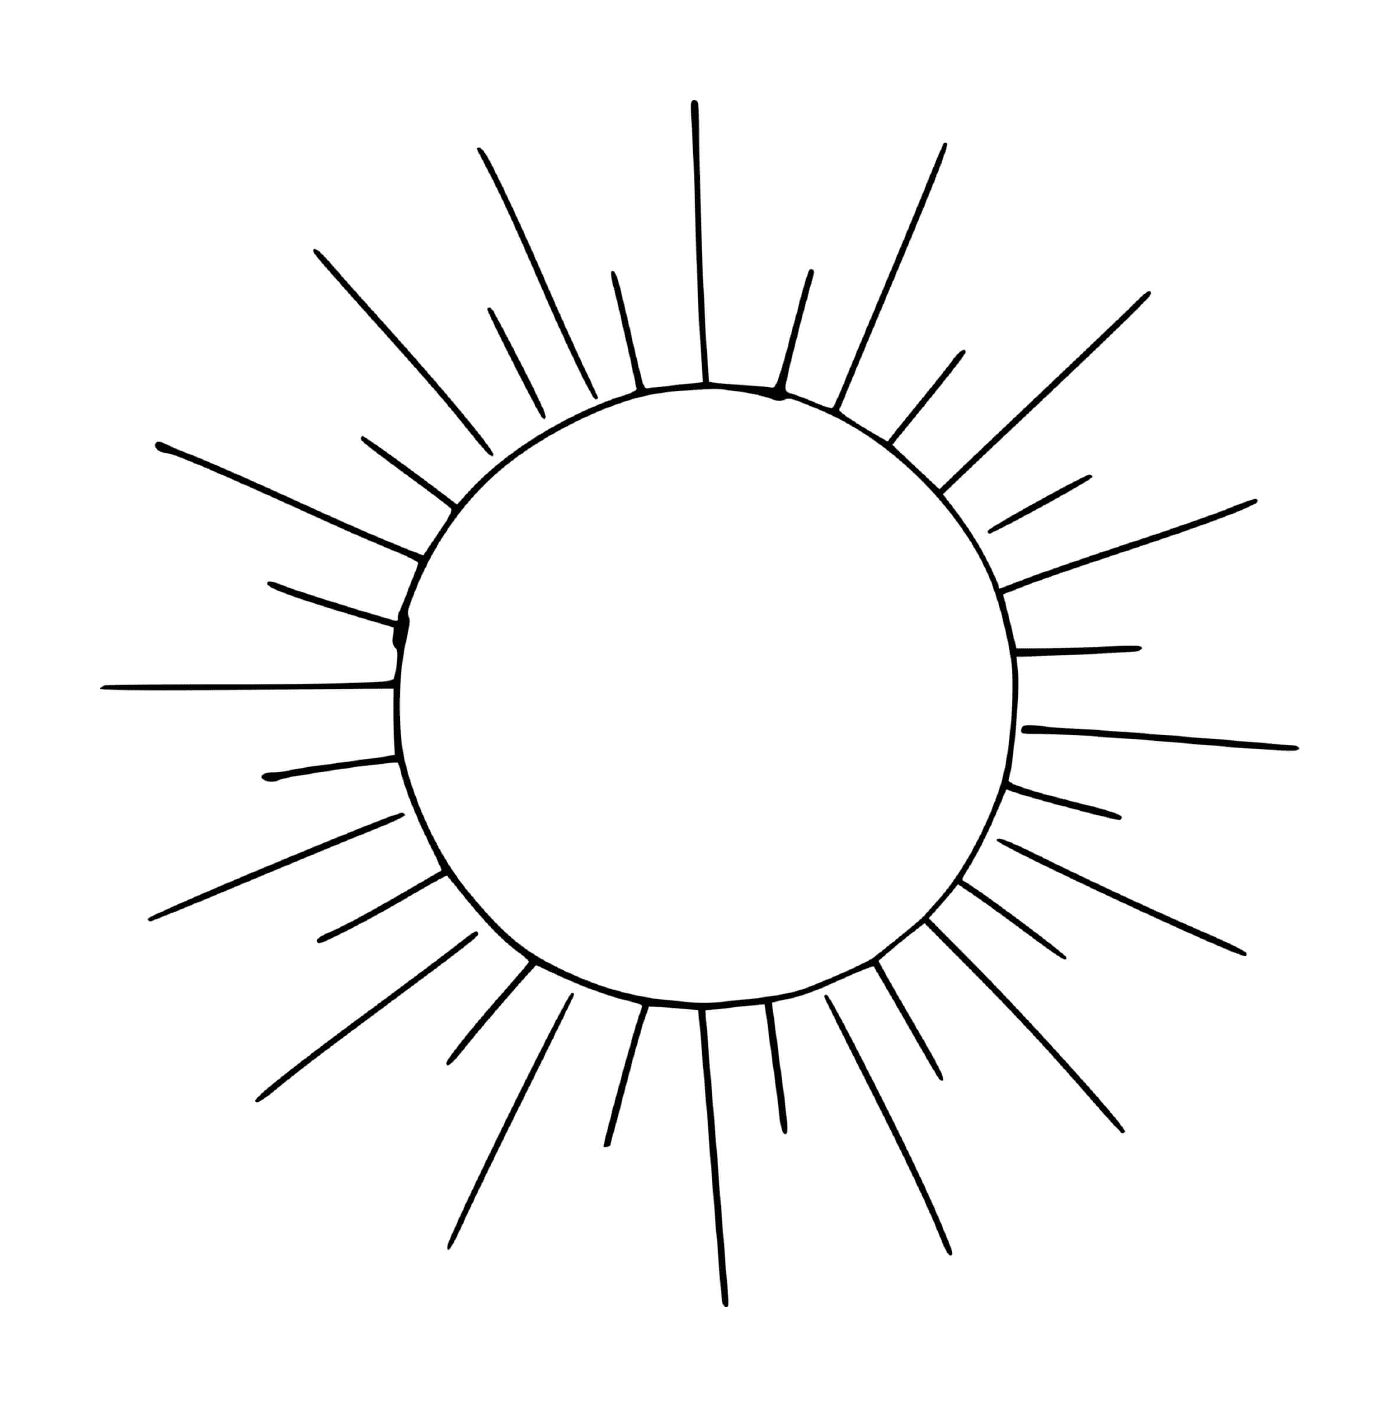   Soleil proche de la terre 